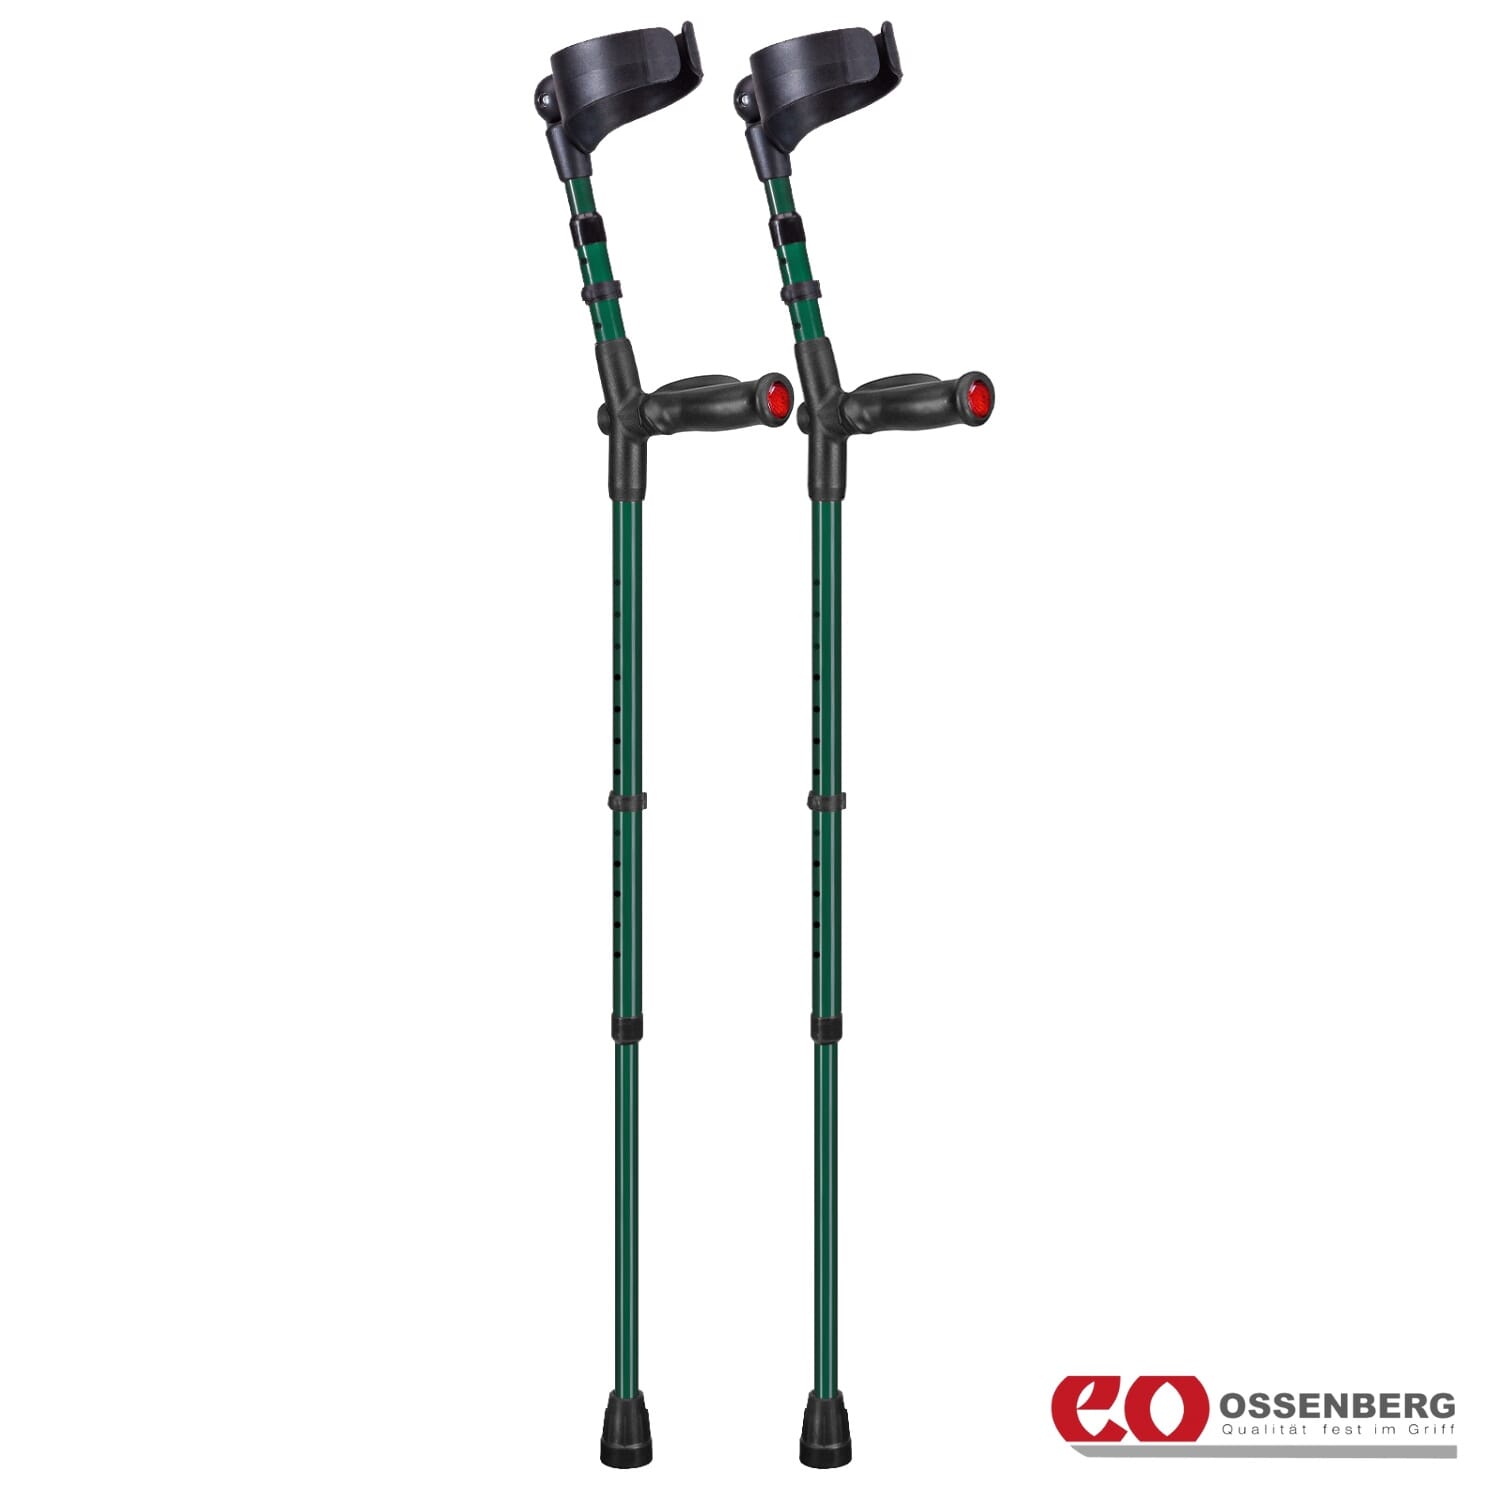 View Ossenberg Comfort Grip Double Adjustable Crutches British Racing Green Pair information